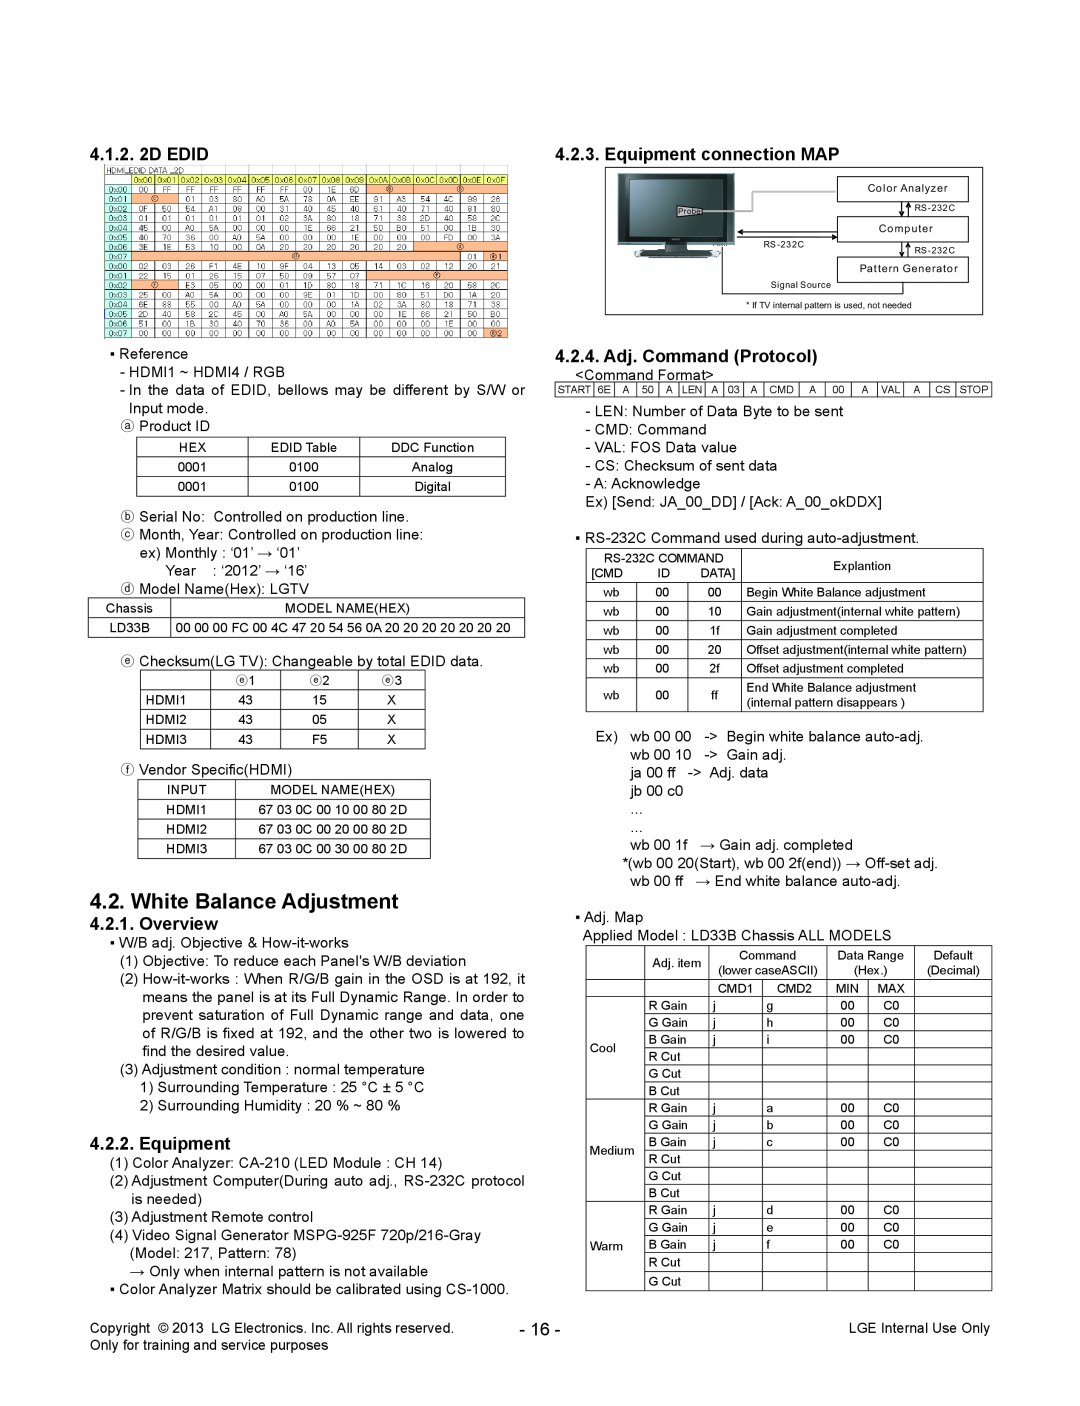 LG Electronics 32LA62**-Z* service manual White Balance Adjustment, 4.1.2. 2D EDID, Overview, Equipment connection MAP 